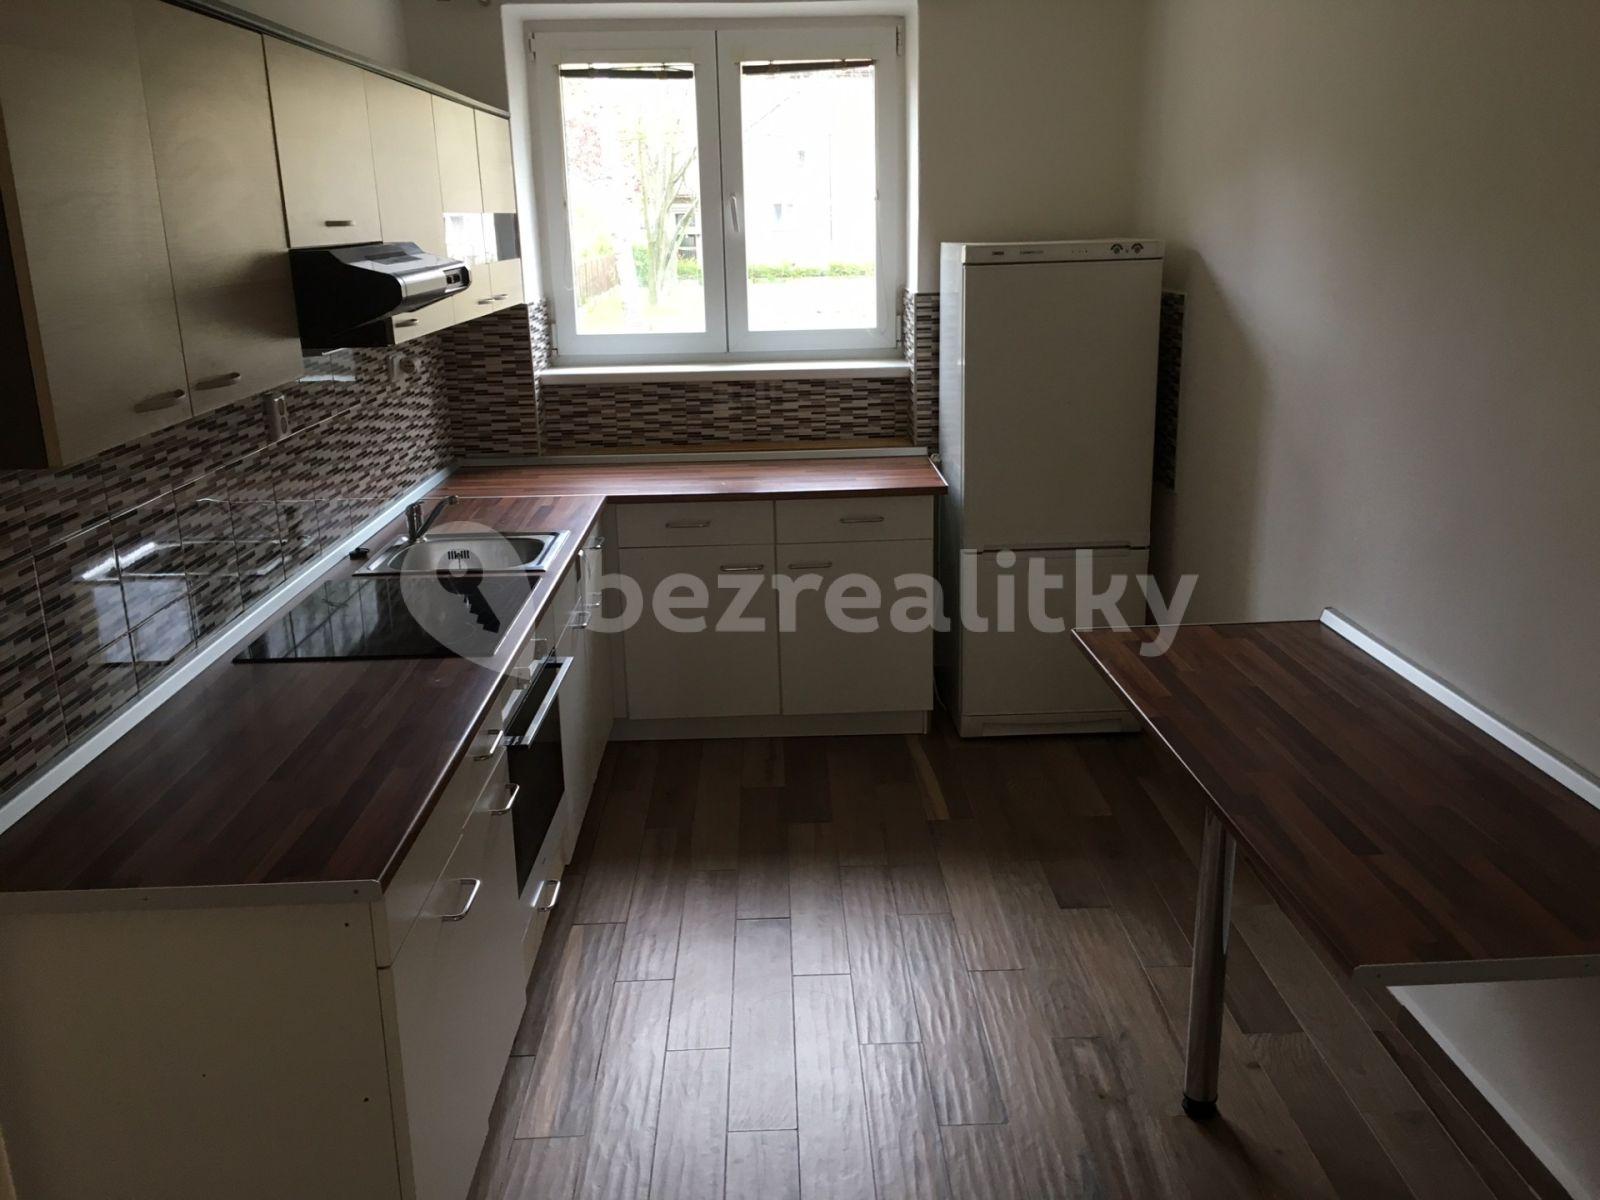 2 bedroom flat to rent, 51 m², Svobody, Pardubice, Pardubický Region